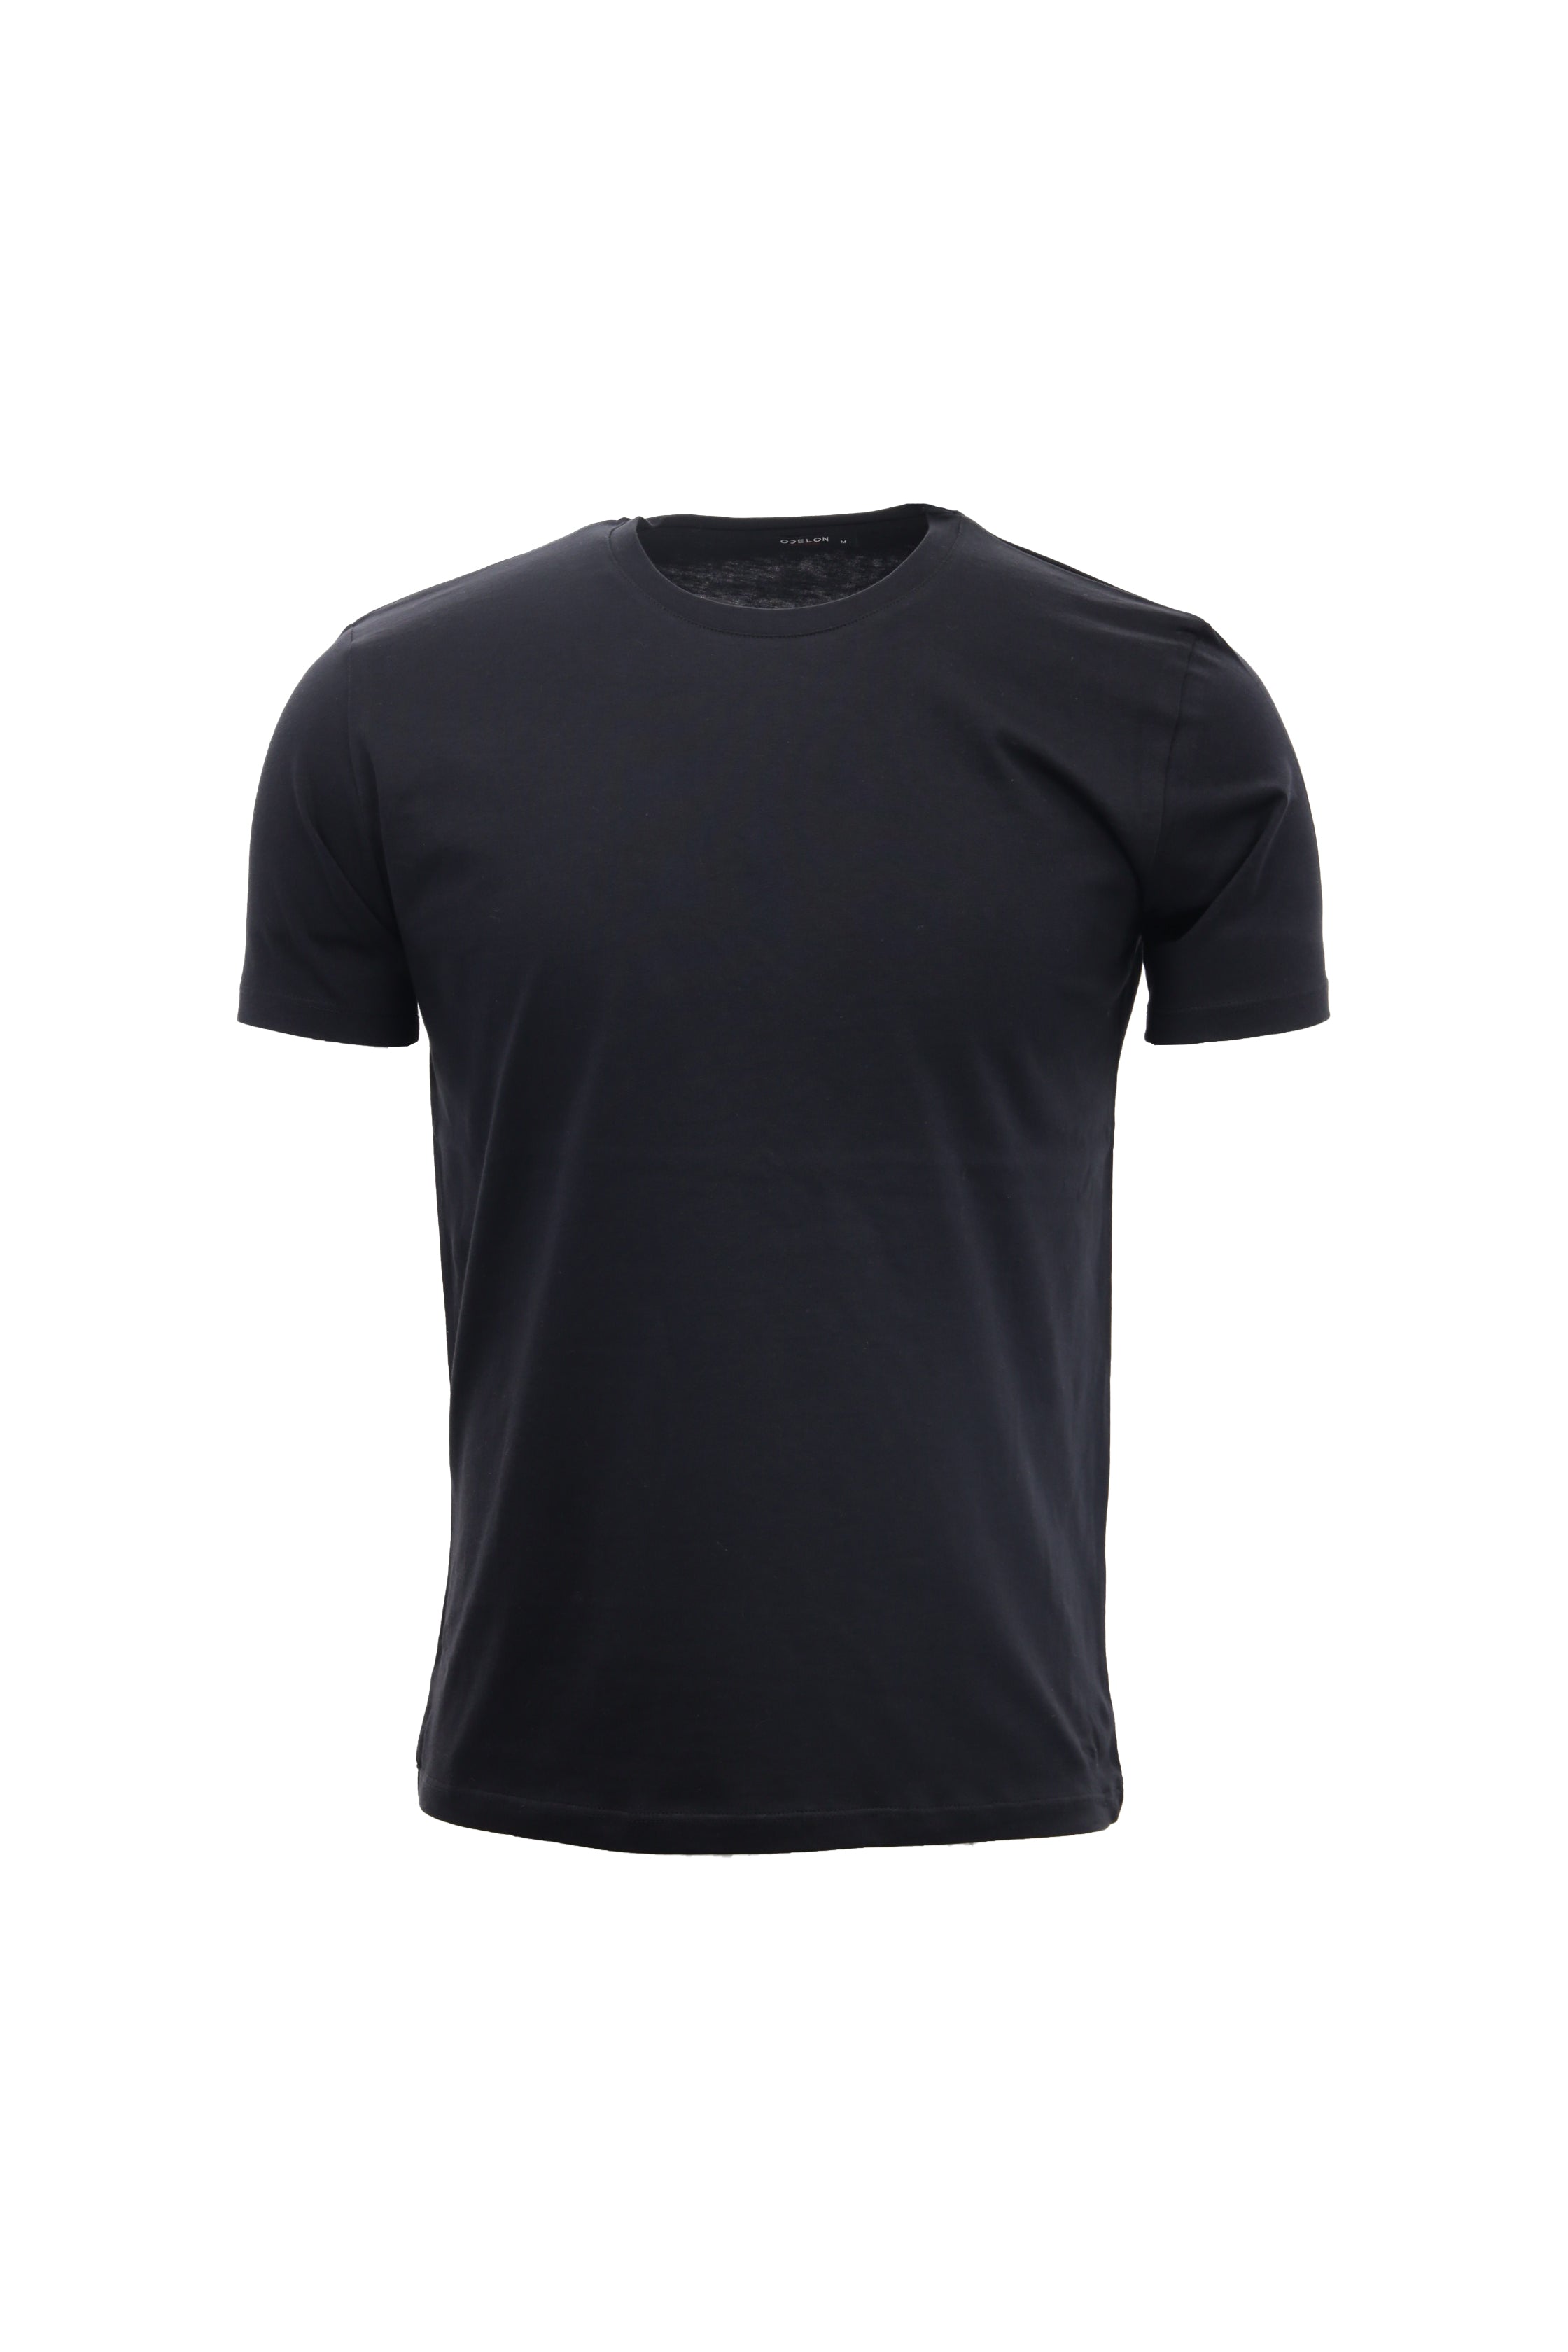 Wear Sierra Men's Everyday Short Sleeve Combed Cotton Crewneck T-Shirt - Wear Sierra